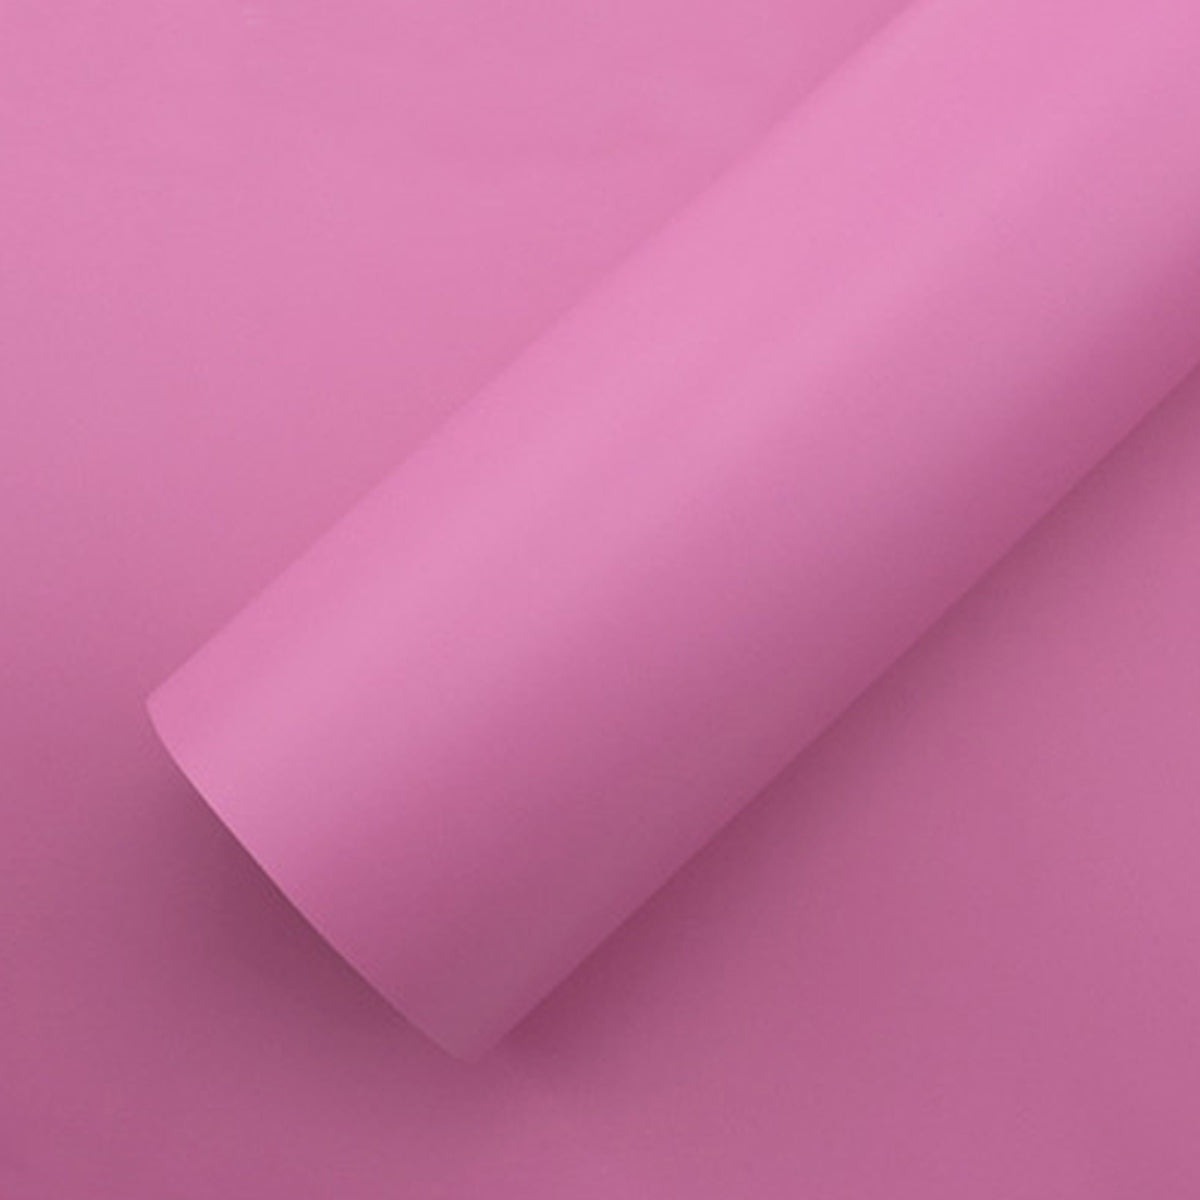 #farbe_Rosa/Pink